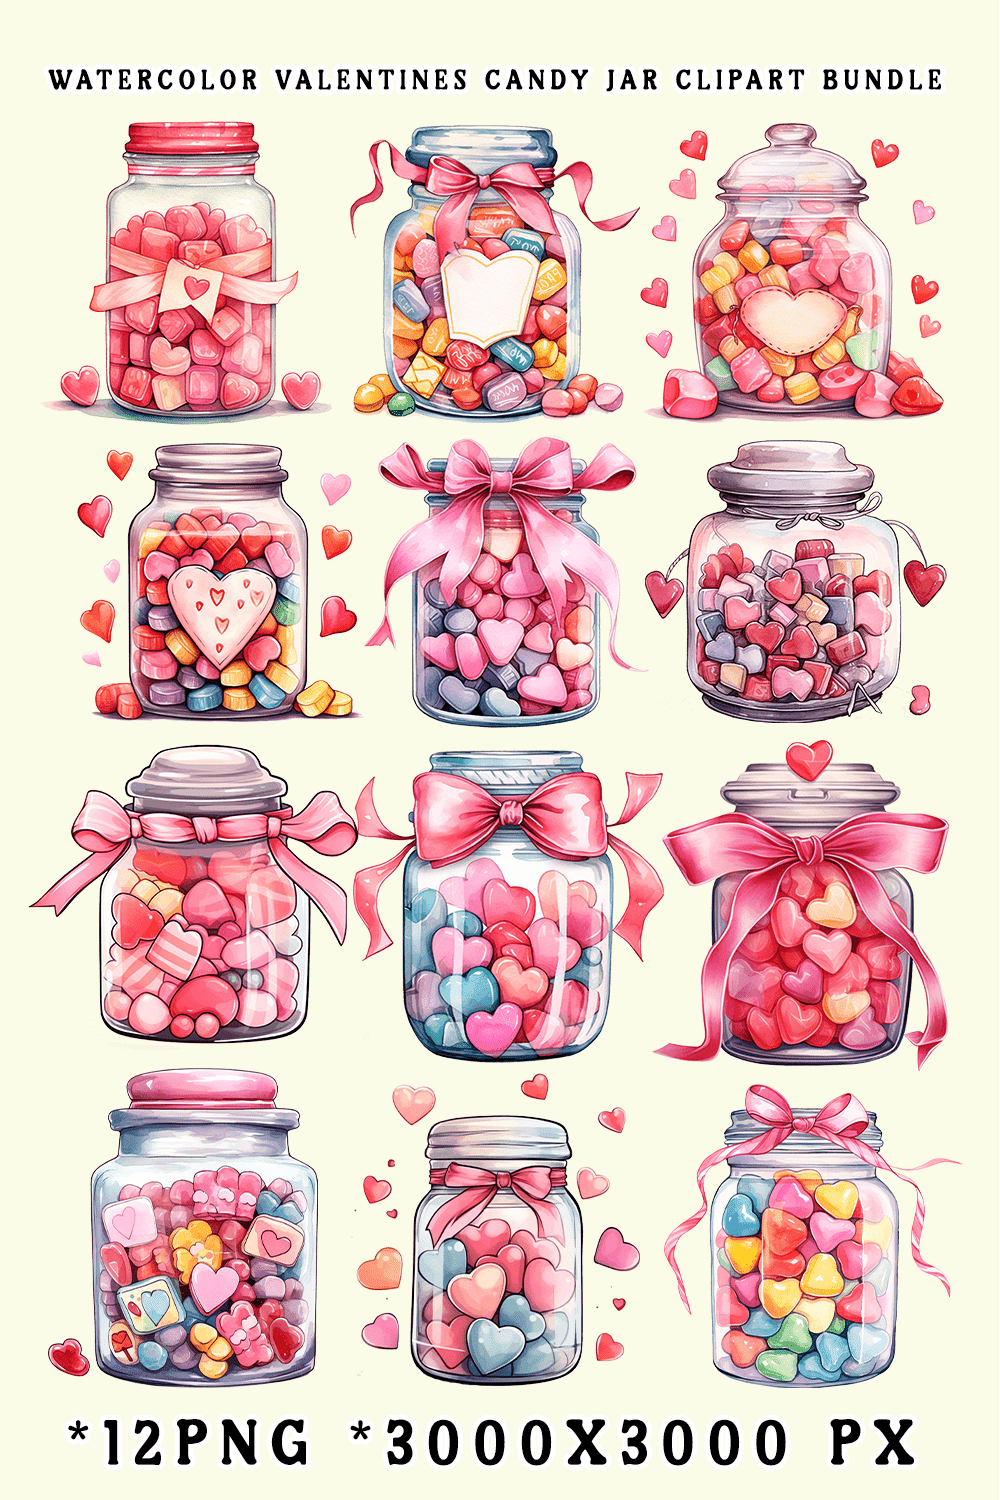 Watercolor Valentines Candy Jar Clipart Bundle pinterest preview image.